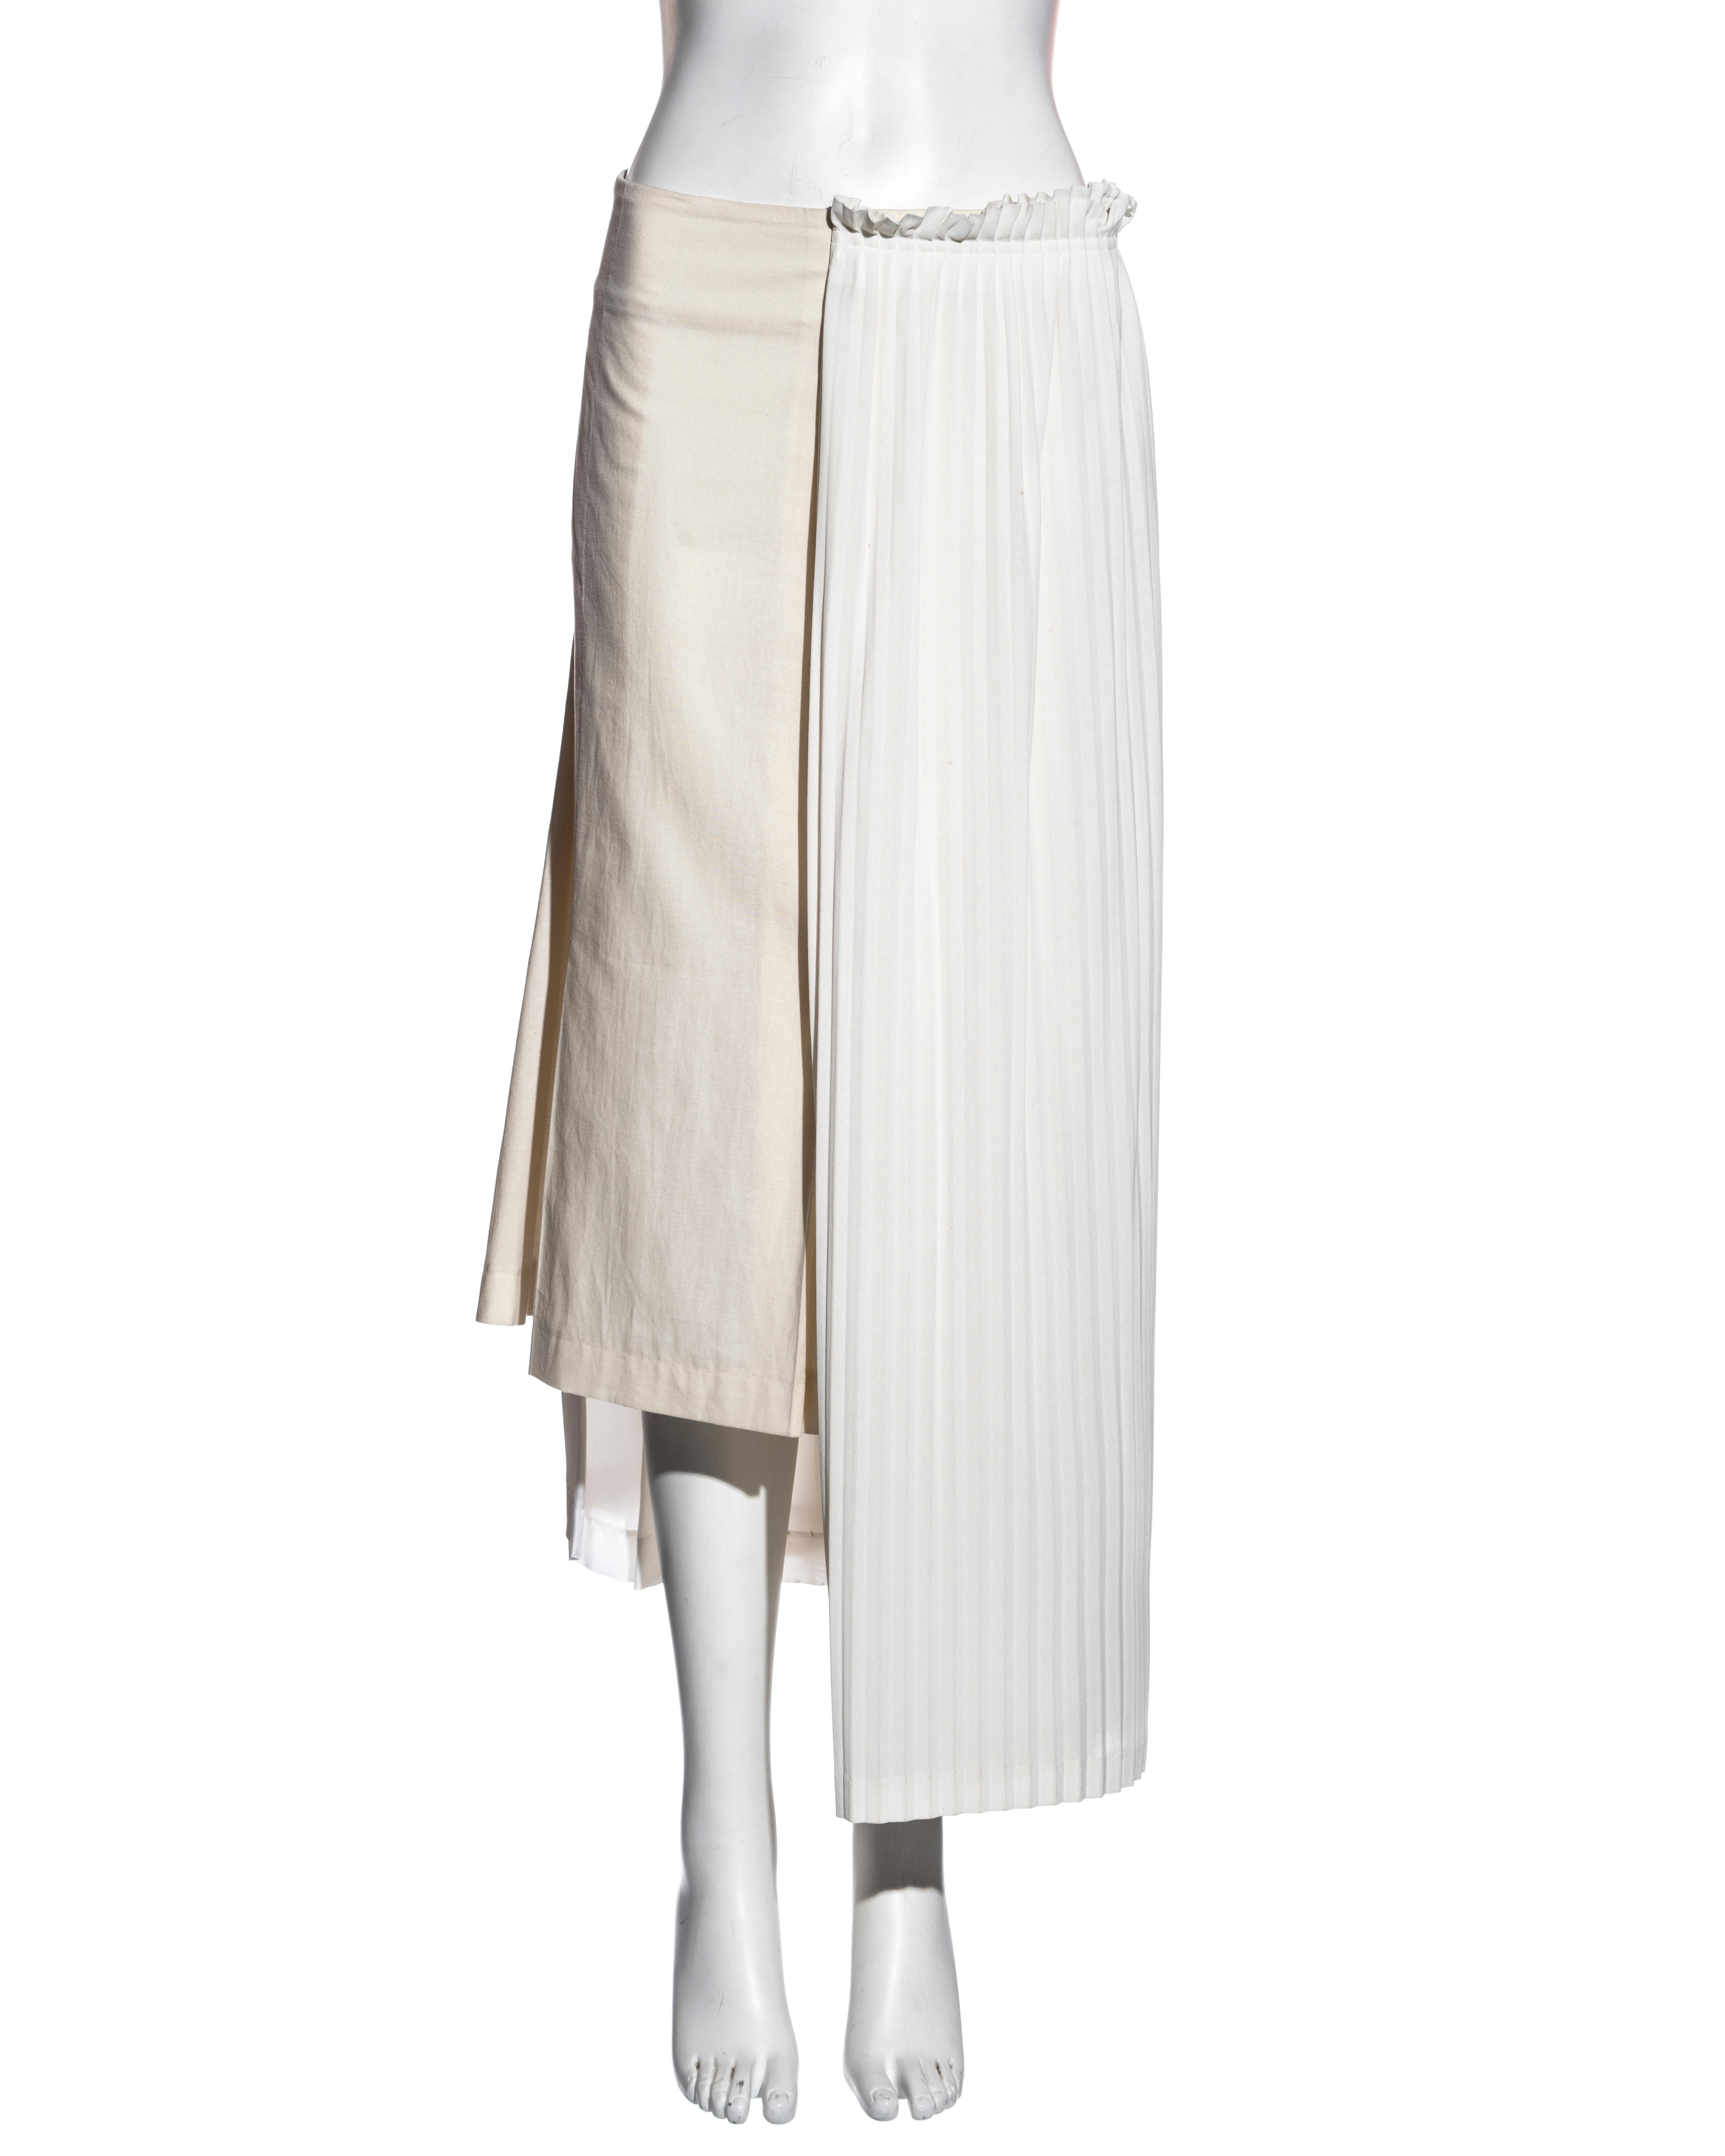 ▪ Comme des Garçons deconstructed cream skirt 
▪ Constructed out of three pleated skirts
▪ Irregular hemline 
▪ Size Medium
▪ Spring-Summer 2002
▪ Made in Japan
